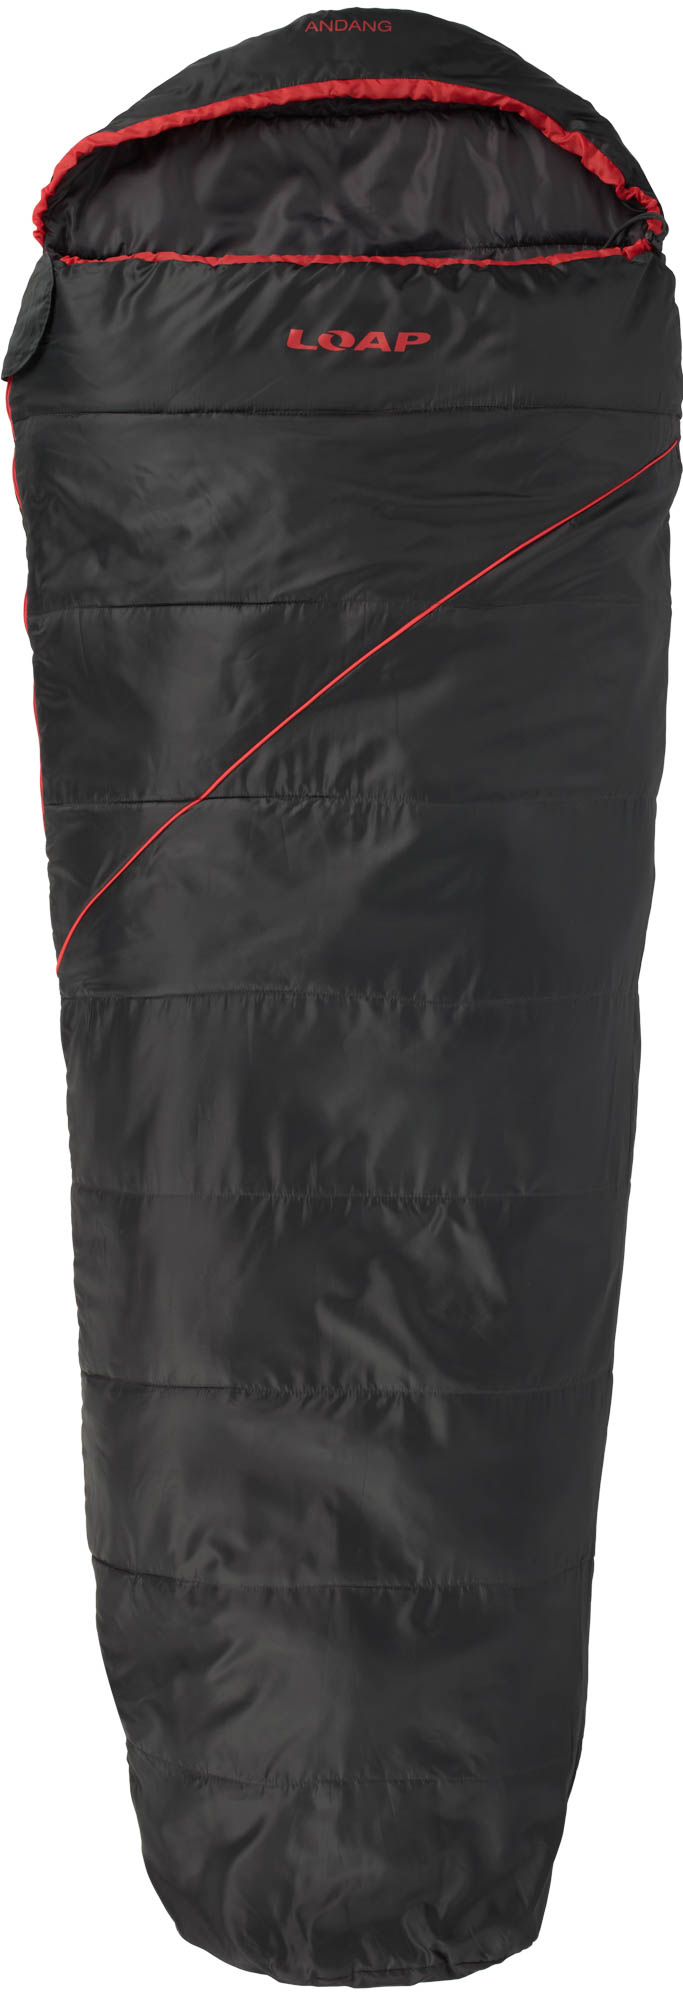 Mummy Sleeping Bag LOAP ANDANG Black/Red